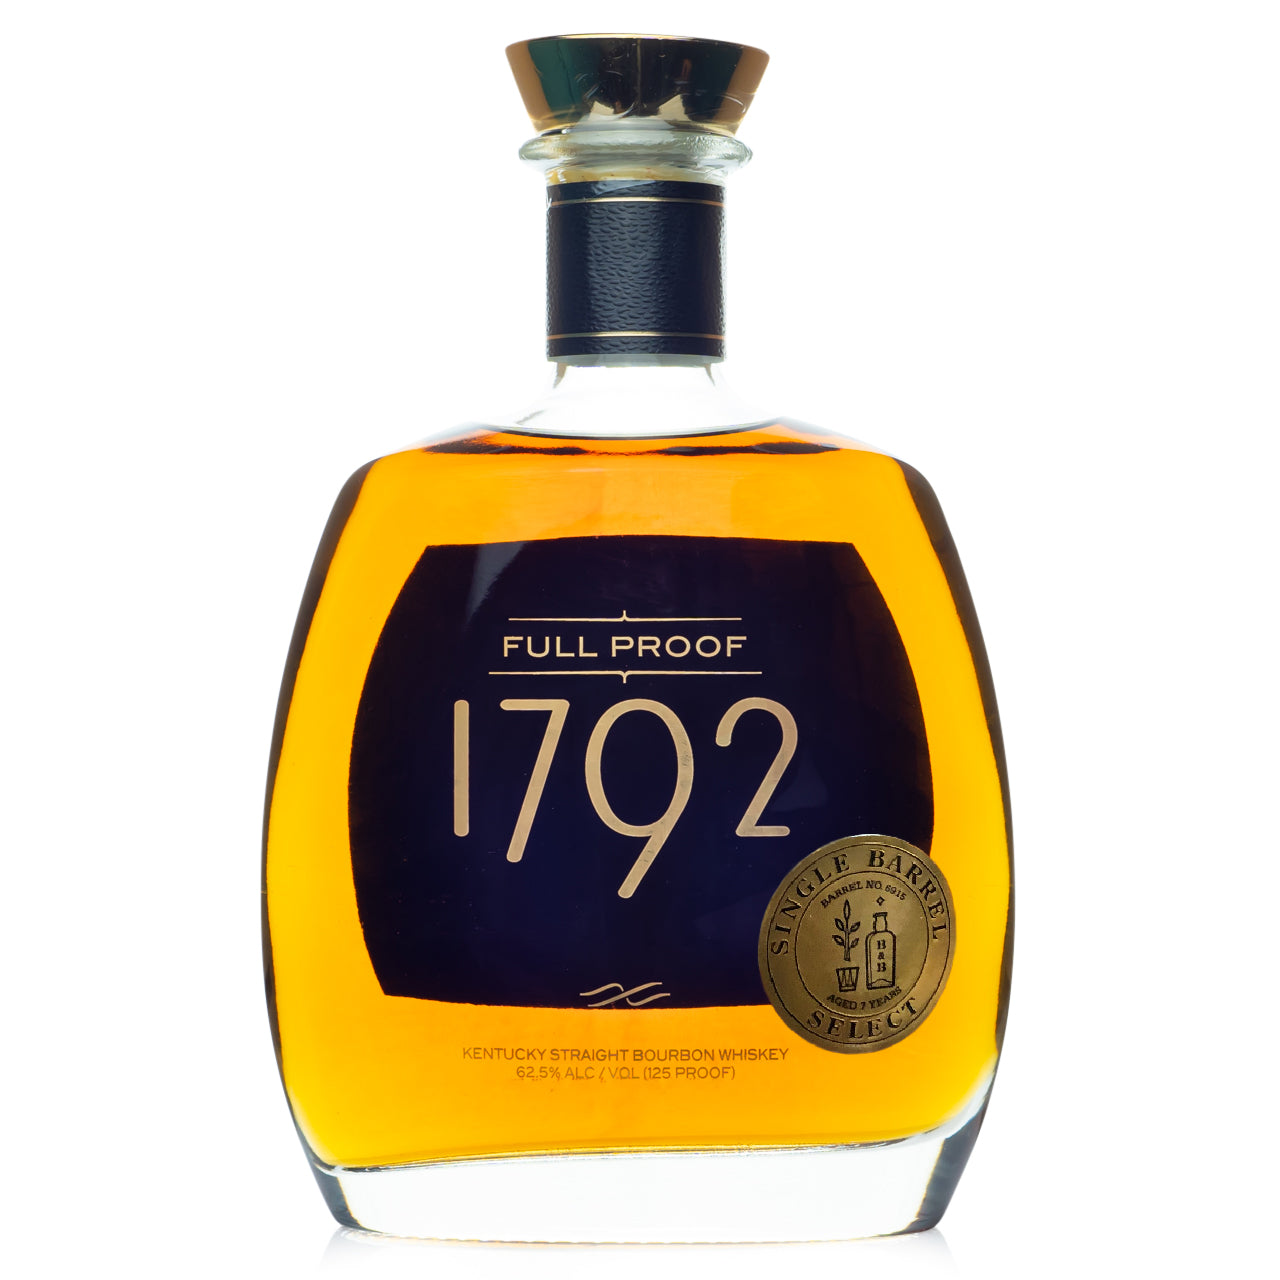 1792 Full Proof "B&B Select" Single Barrel Bourbon